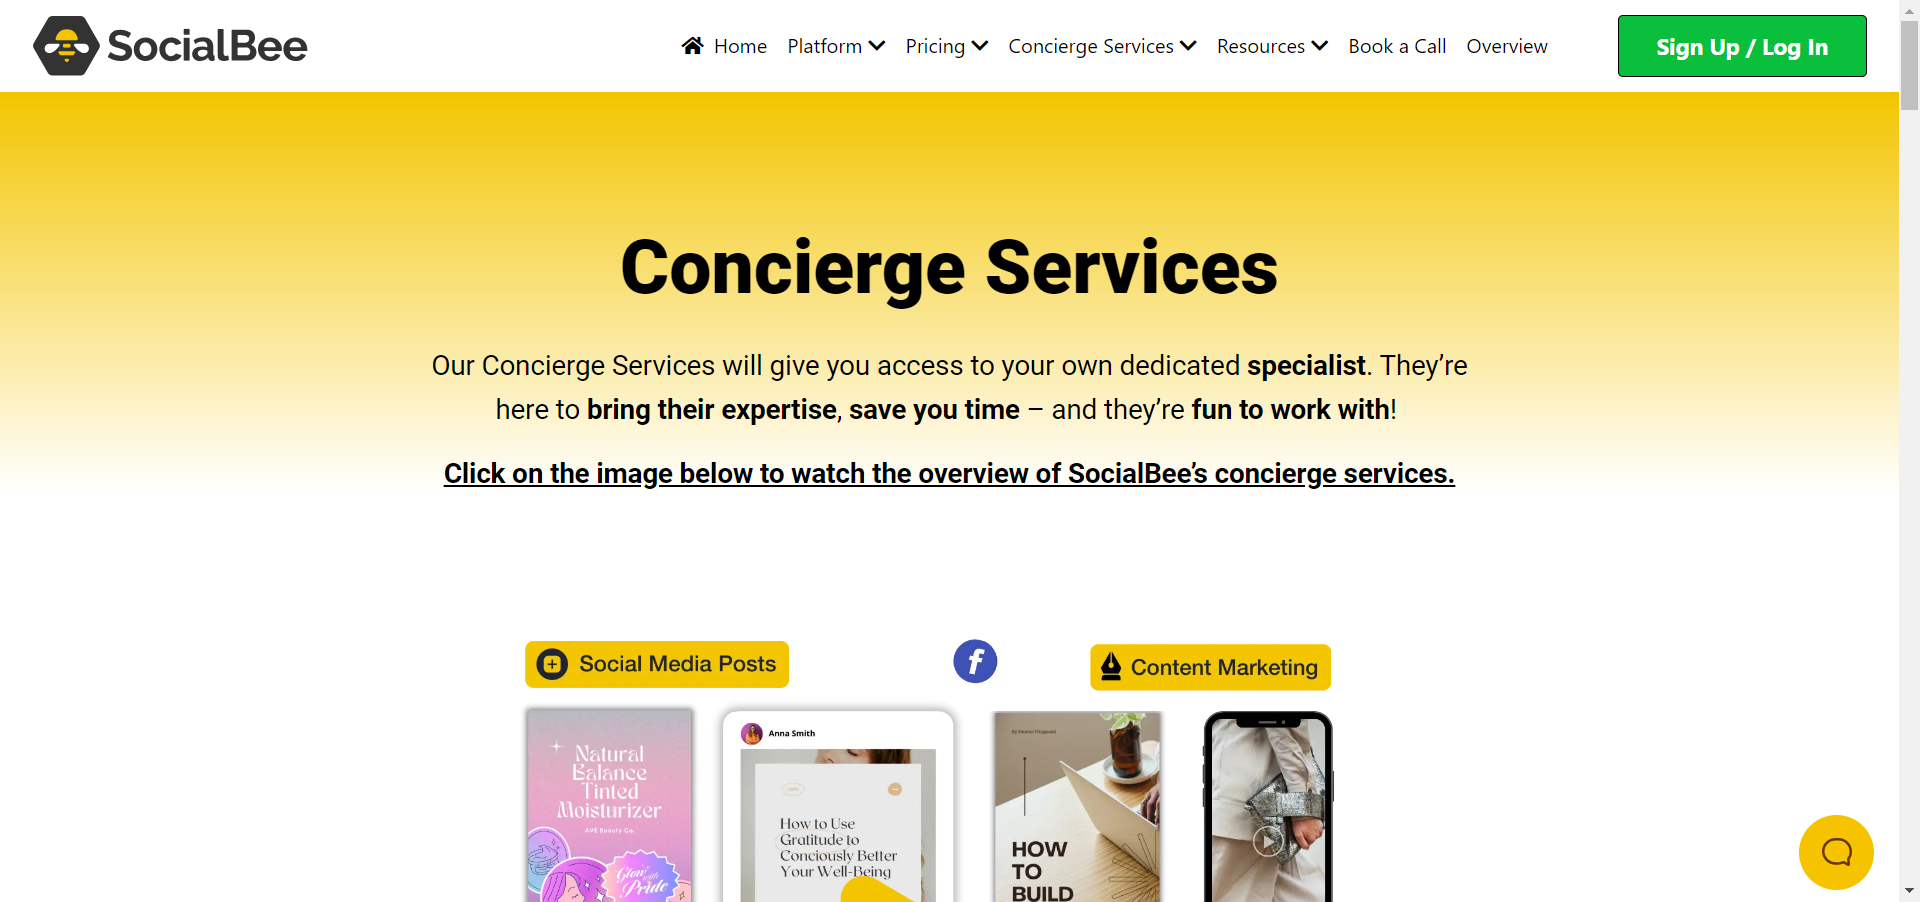 SocialBee's Conceirge services